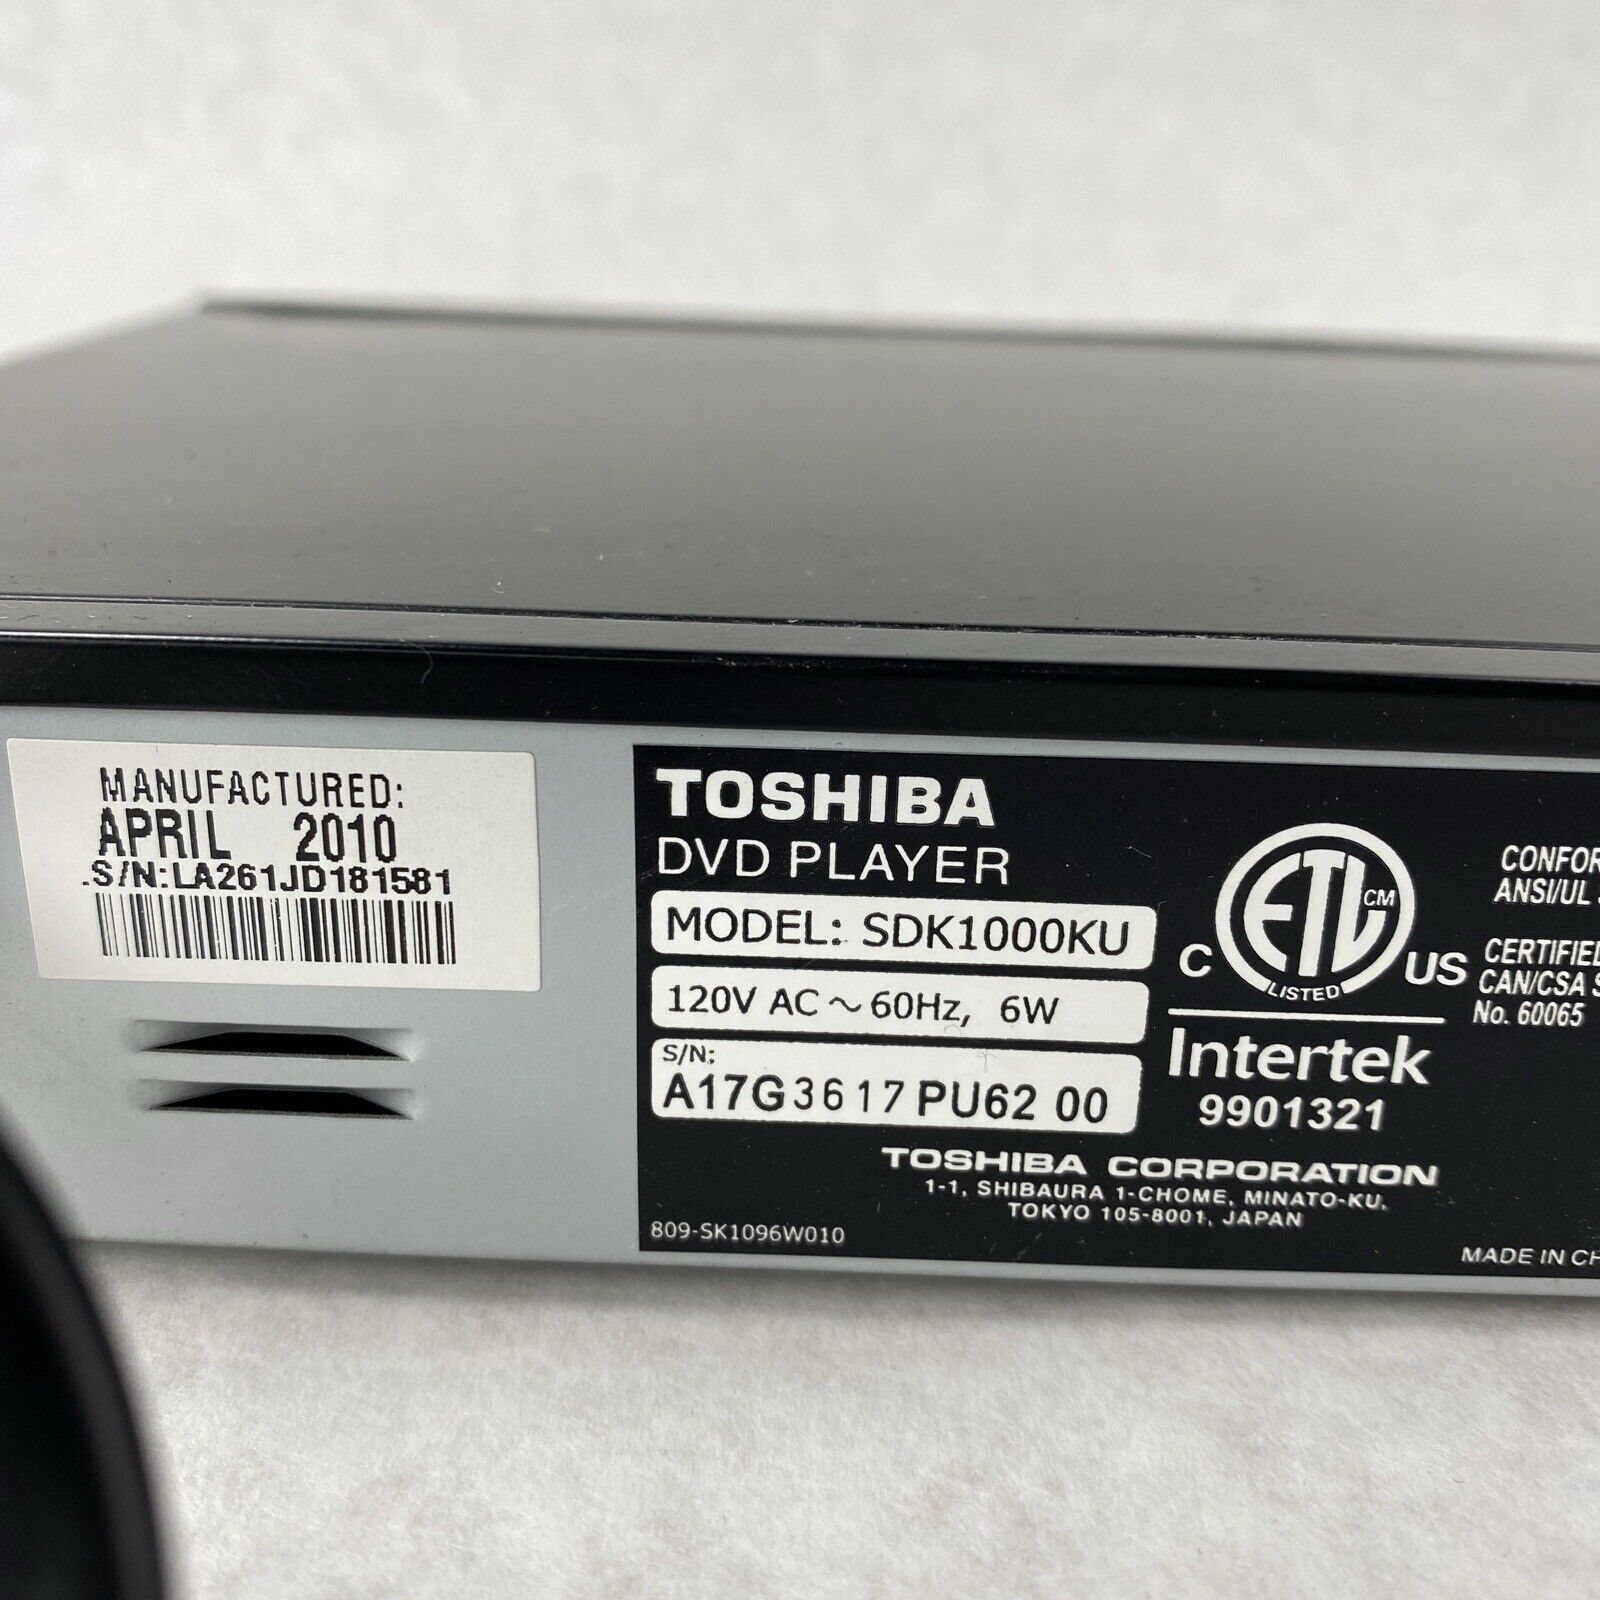 Toshiba SDK1000KU DVD Player HDMI Tested but NO REMOTE